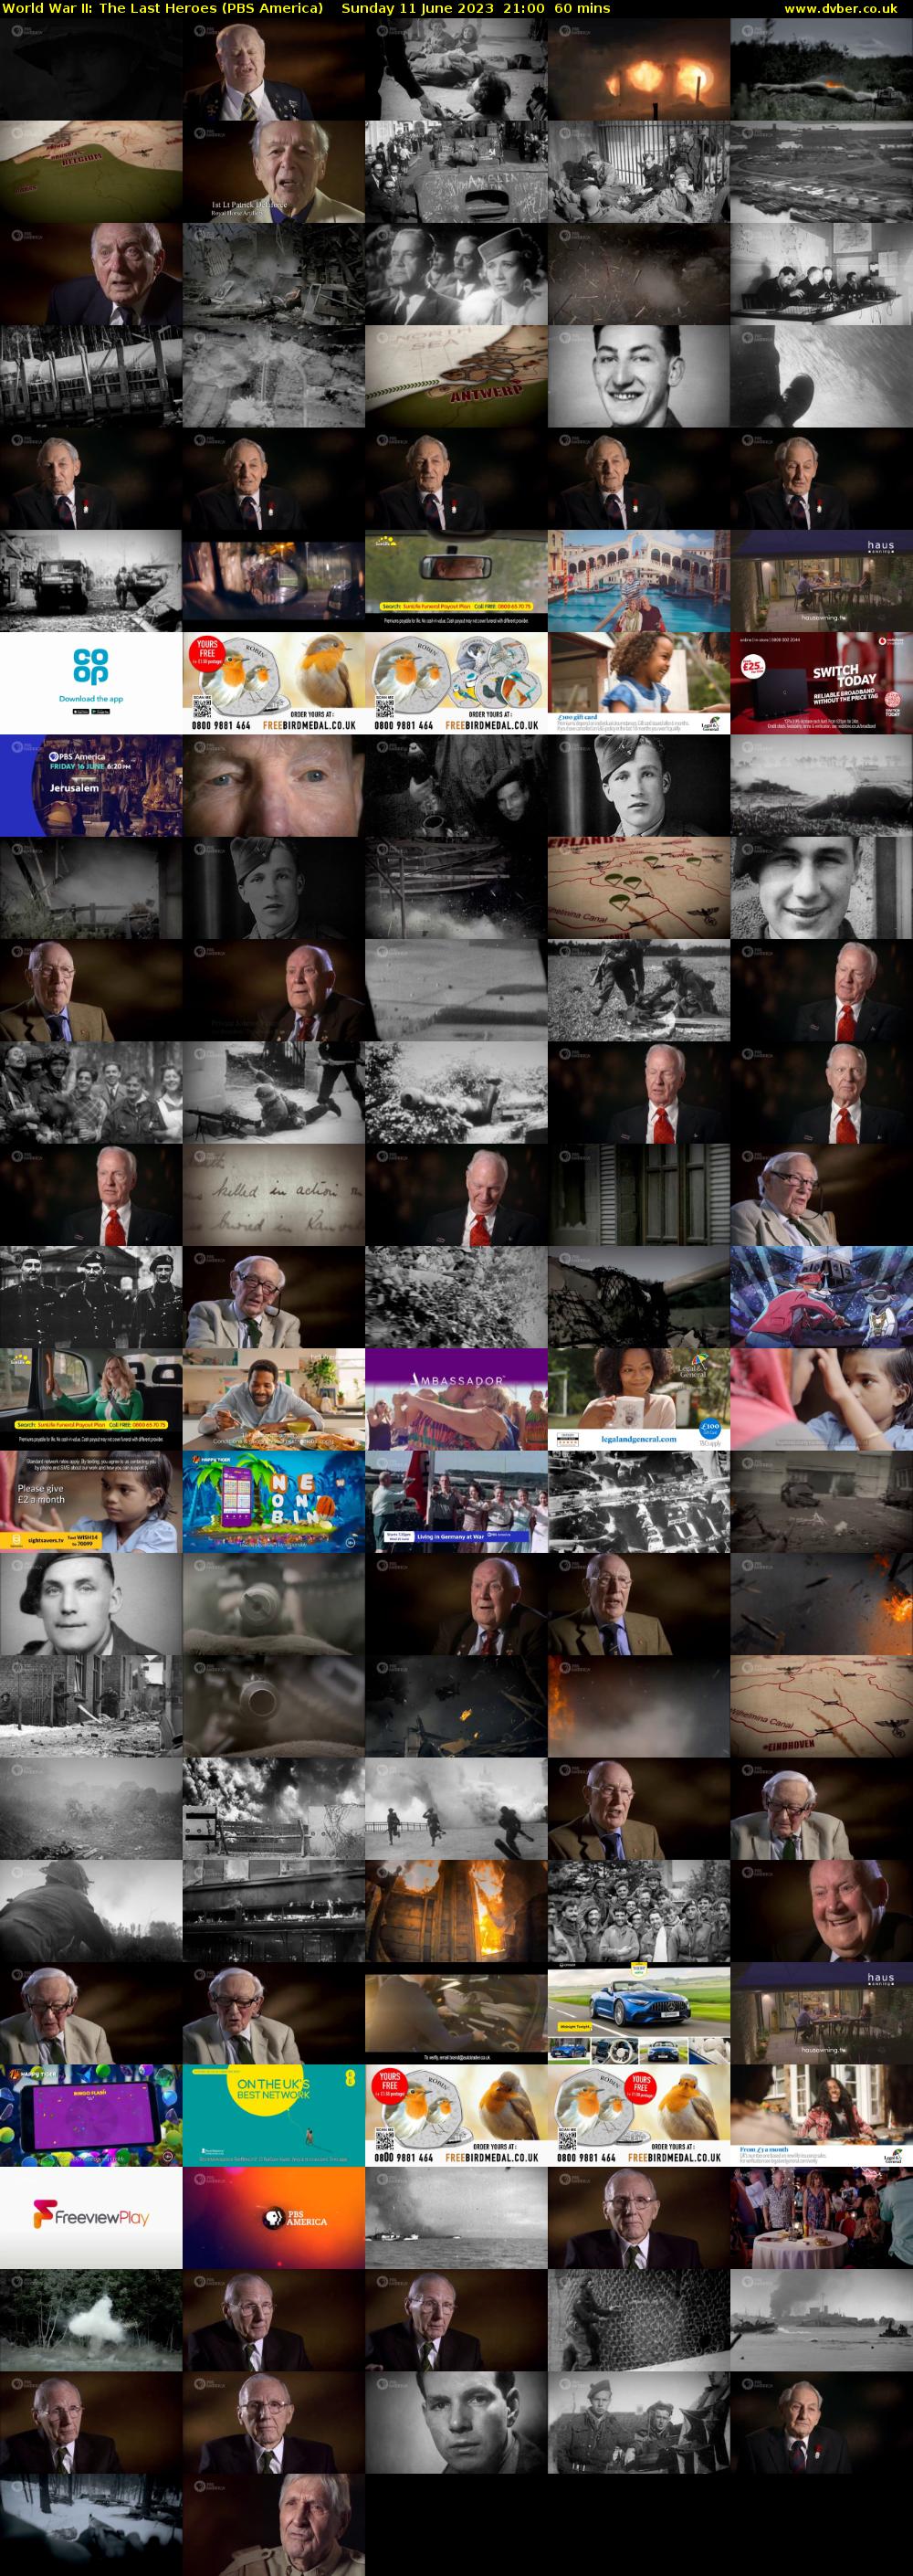 World War II: The Last Heroes (PBS America) Sunday 11 June 2023 21:00 - 22:00